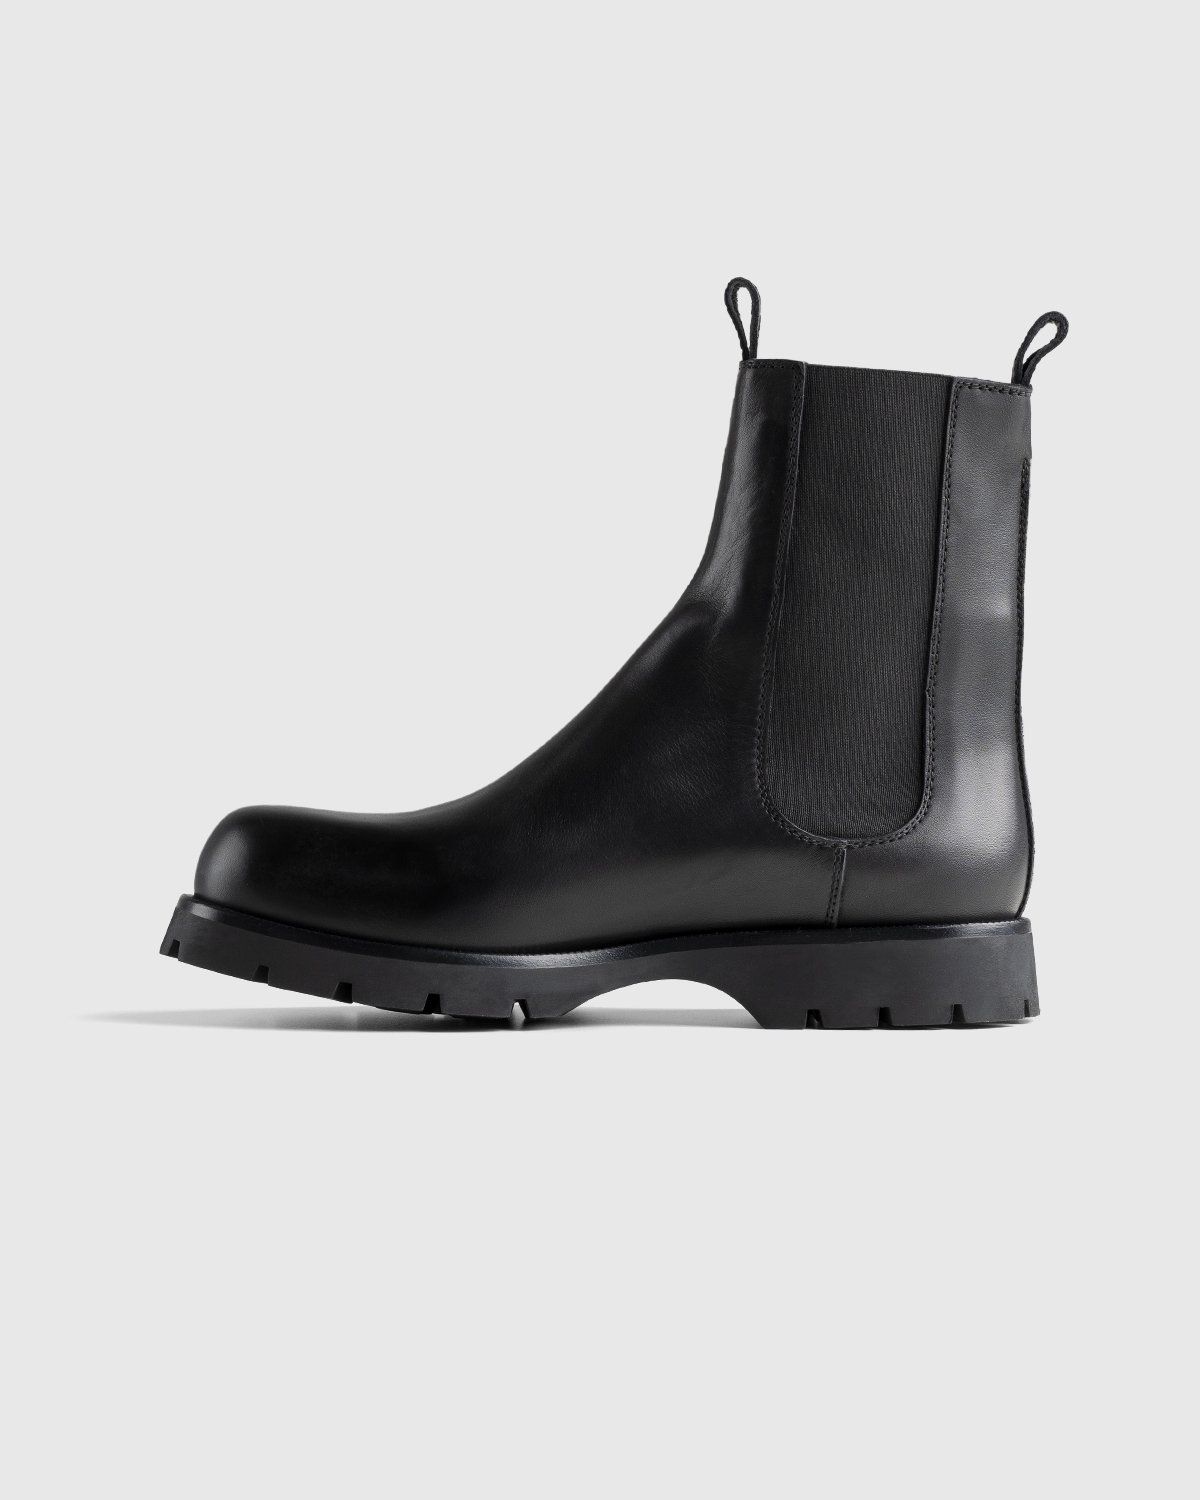 Jil Sander – Chelsea Boots Black - Shoes - Black - Image 2